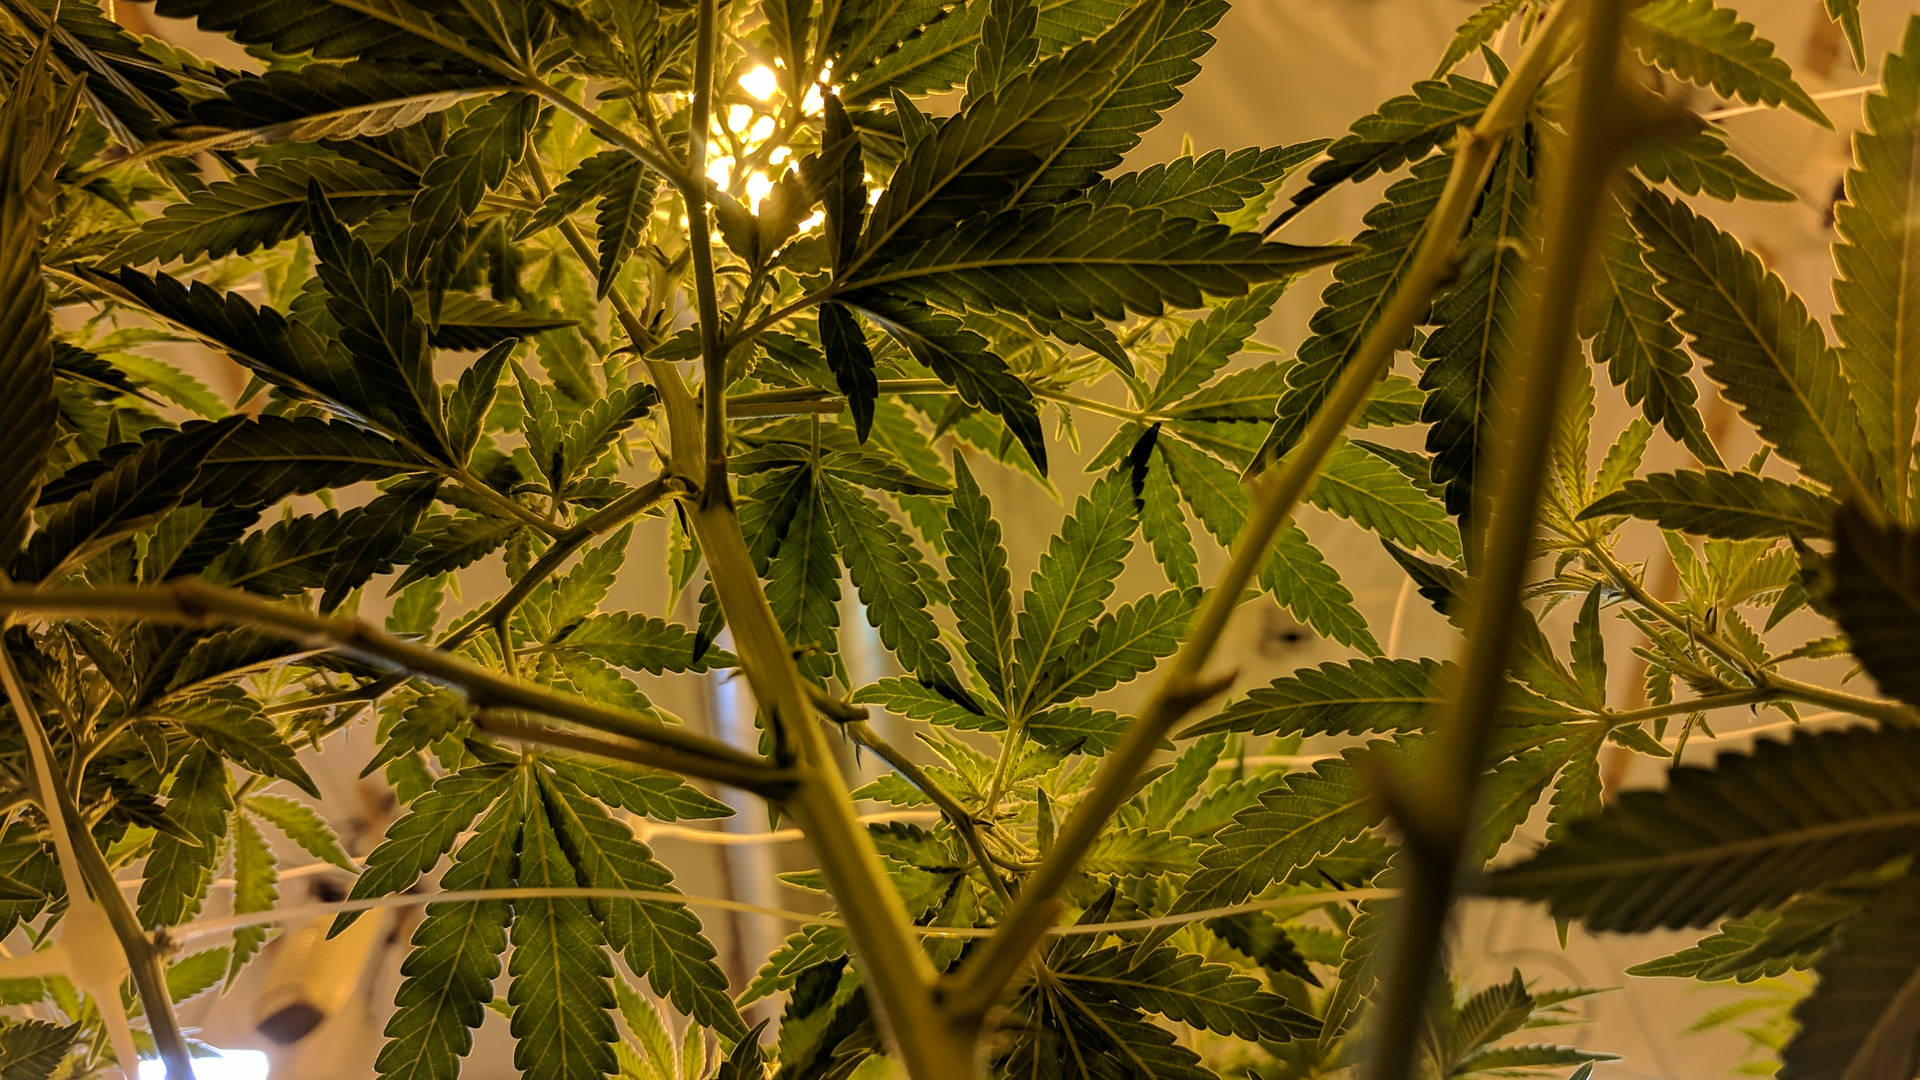 Evergreen cannabis plants in the natural habitat Wallpaper